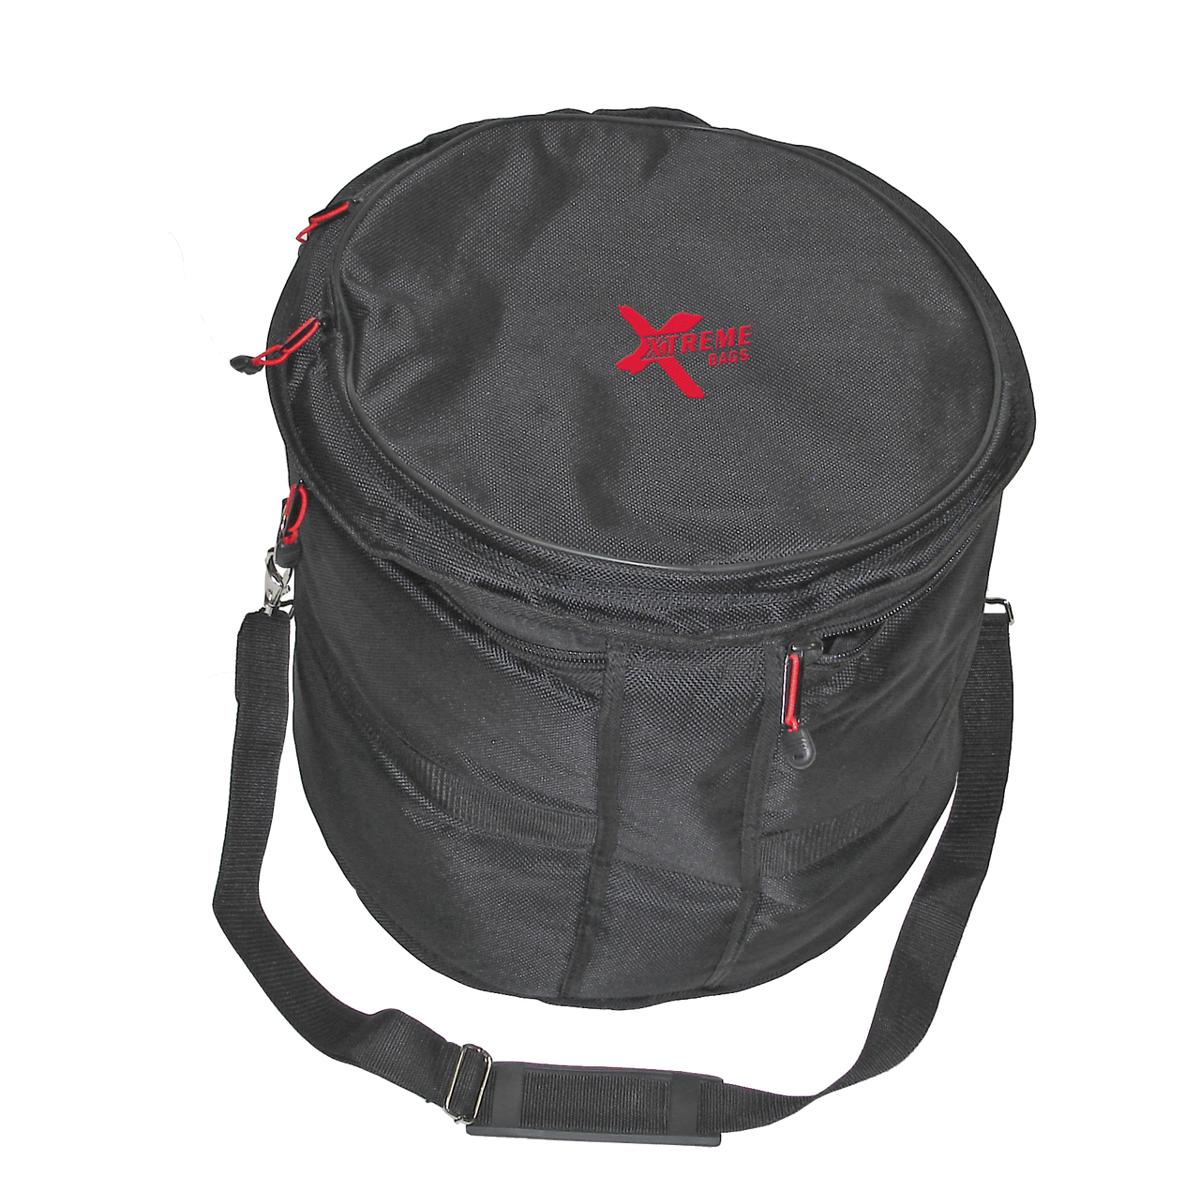 Xtreme DA546 16inch Drum Bag 16x12-14inch